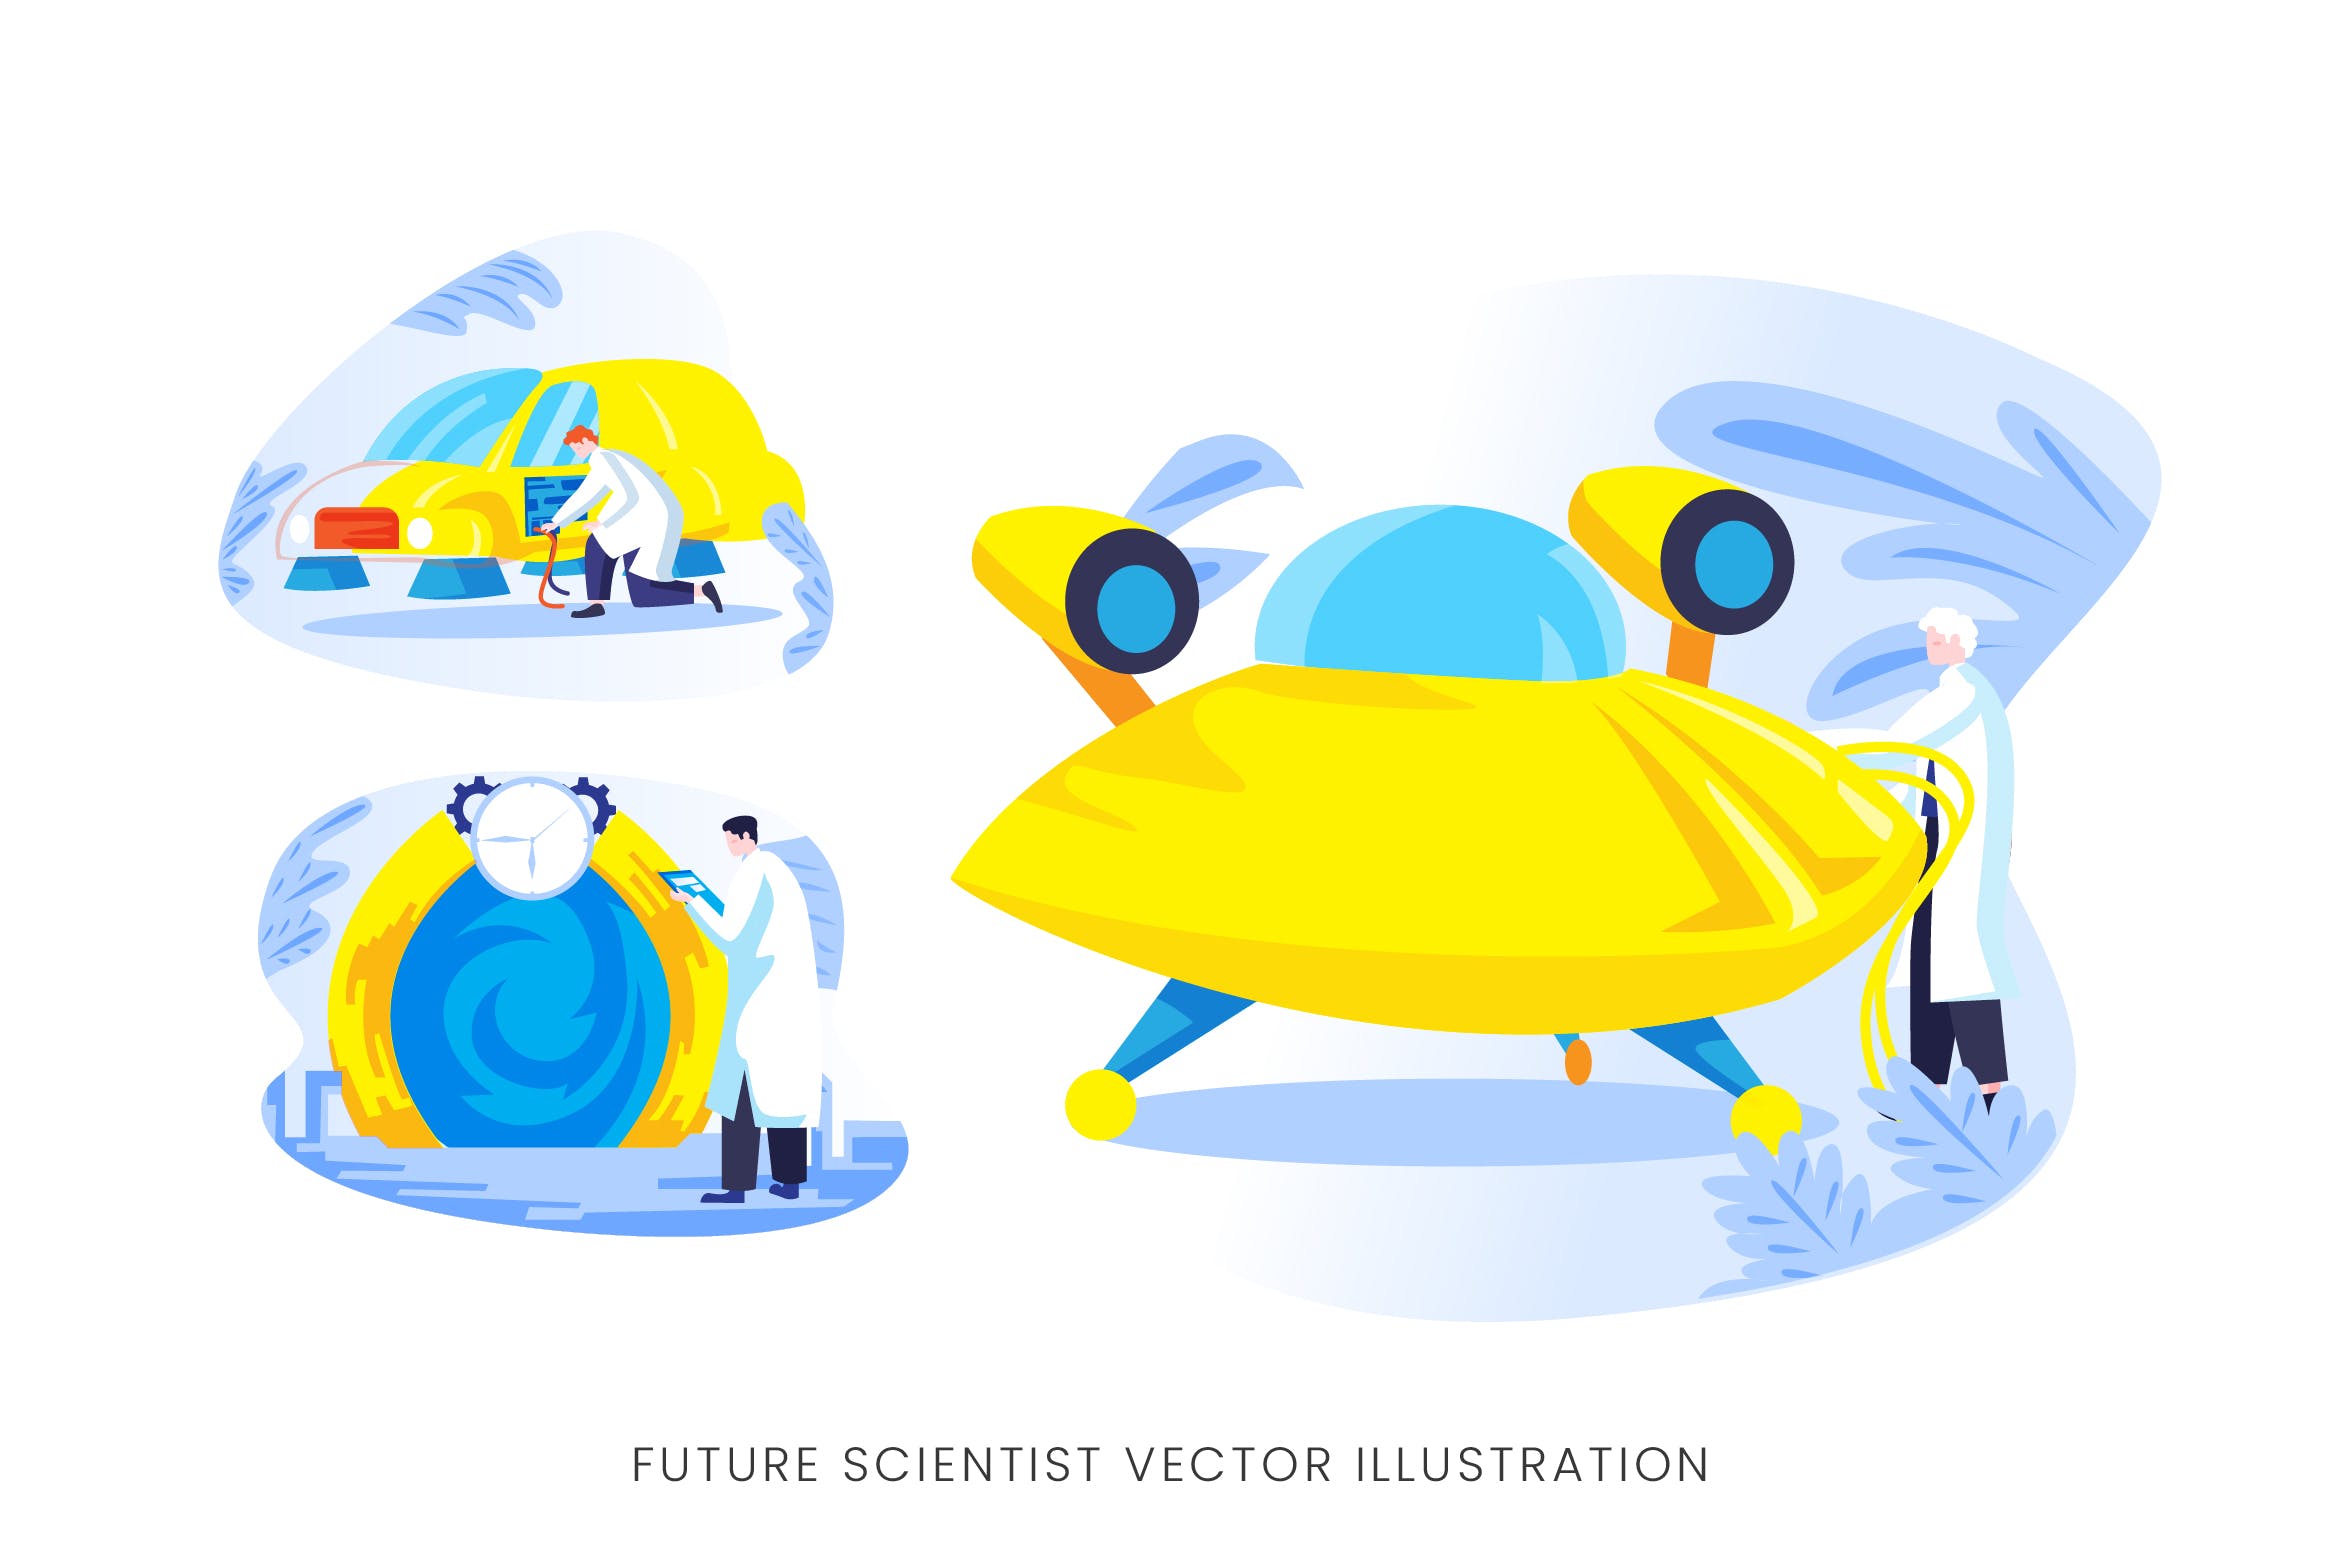 未来科学家人物形象矢量手绘素材 Future Scientist Vector Character Set插图